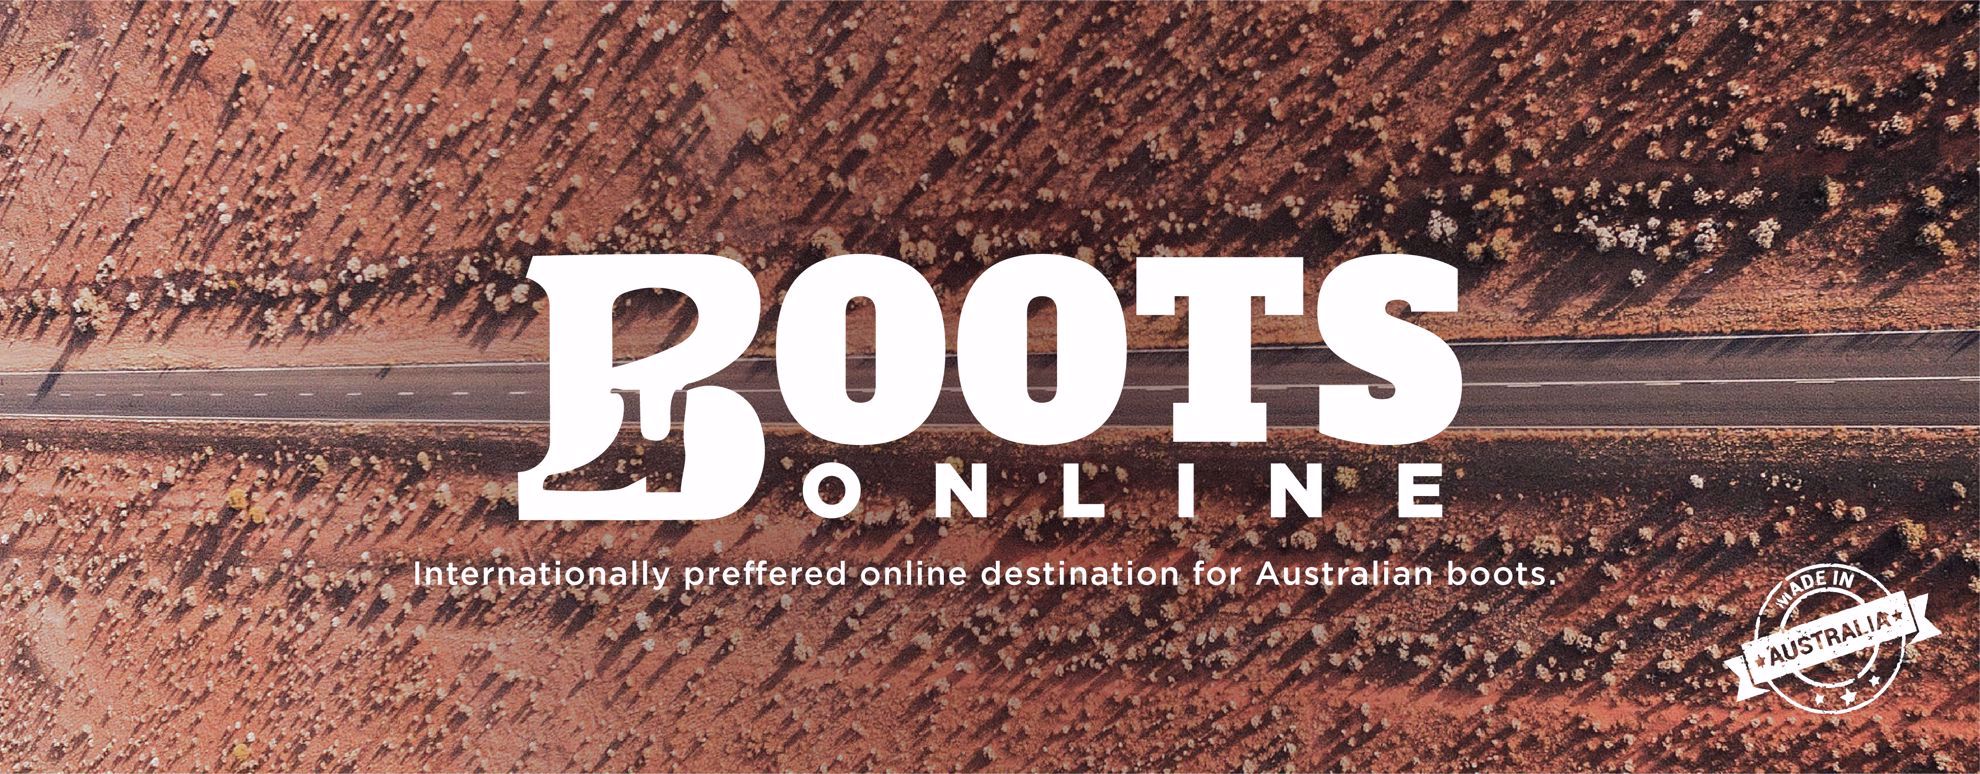 australian boots online